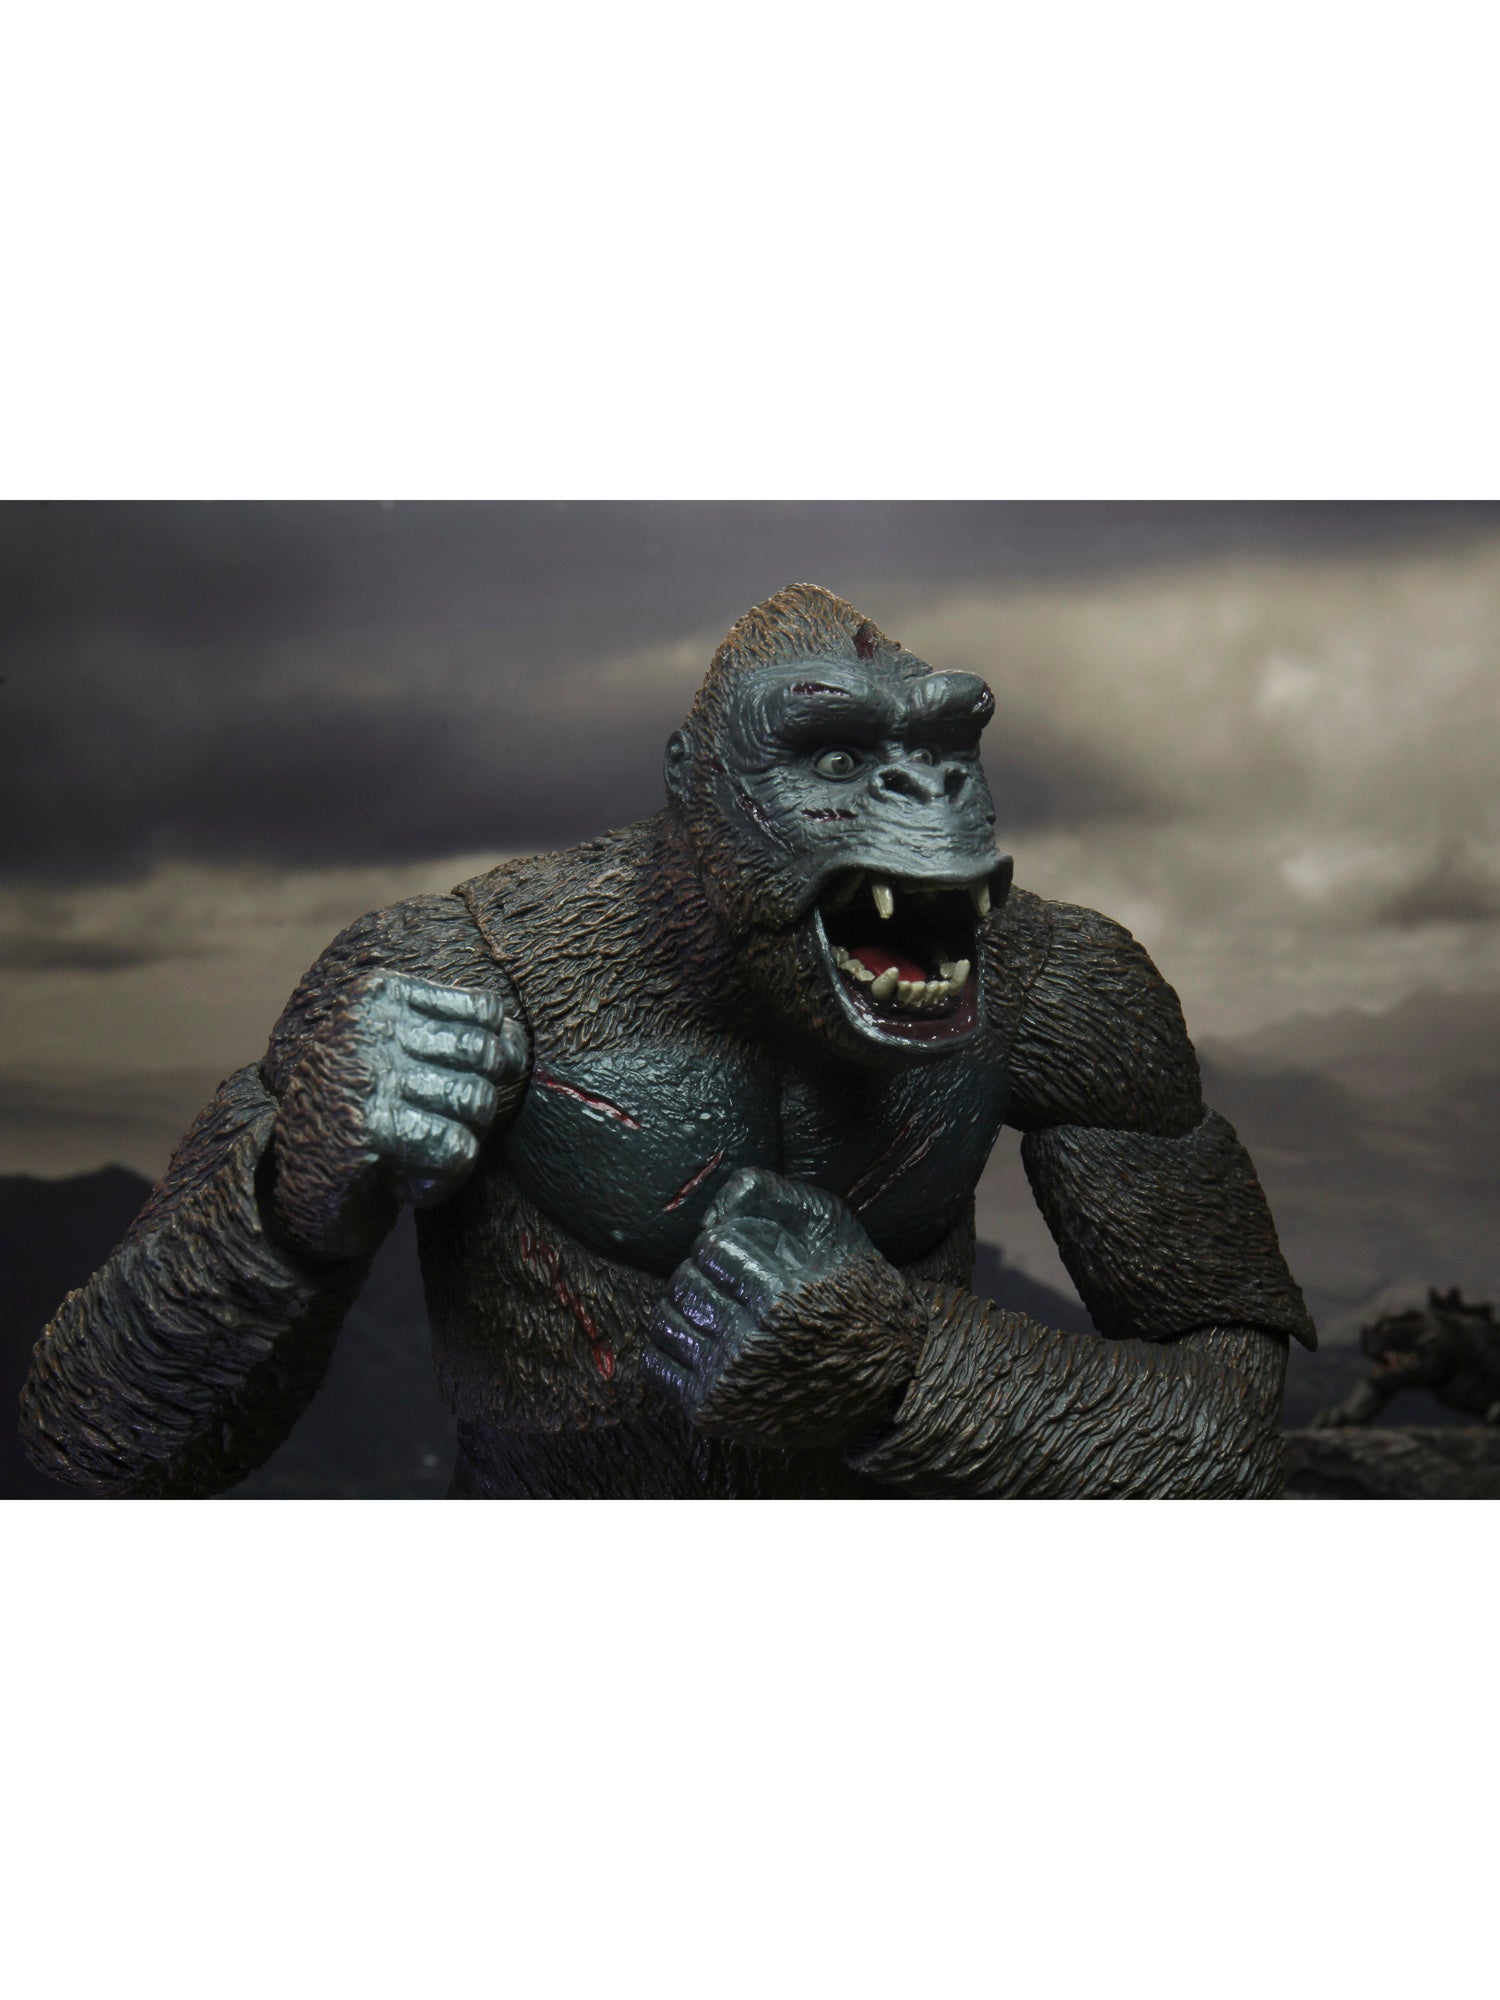 NECA - King Kong - 7" Scale Action Figure - Ultimate King Kong (Island) - costumes.com